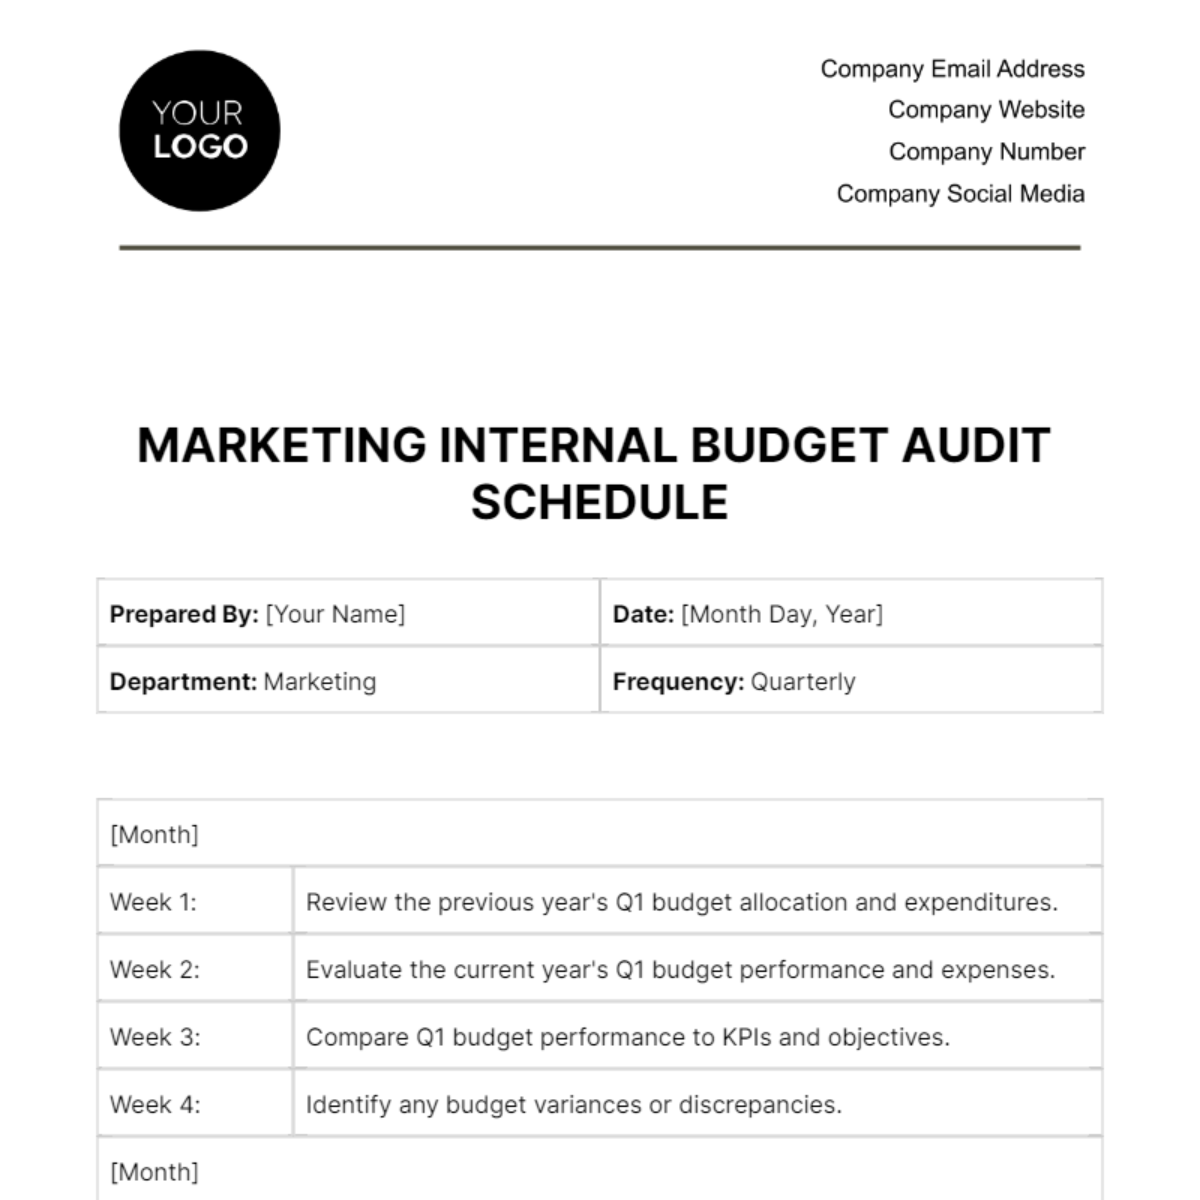 Marketing Internal Budget Audit Schedule Template